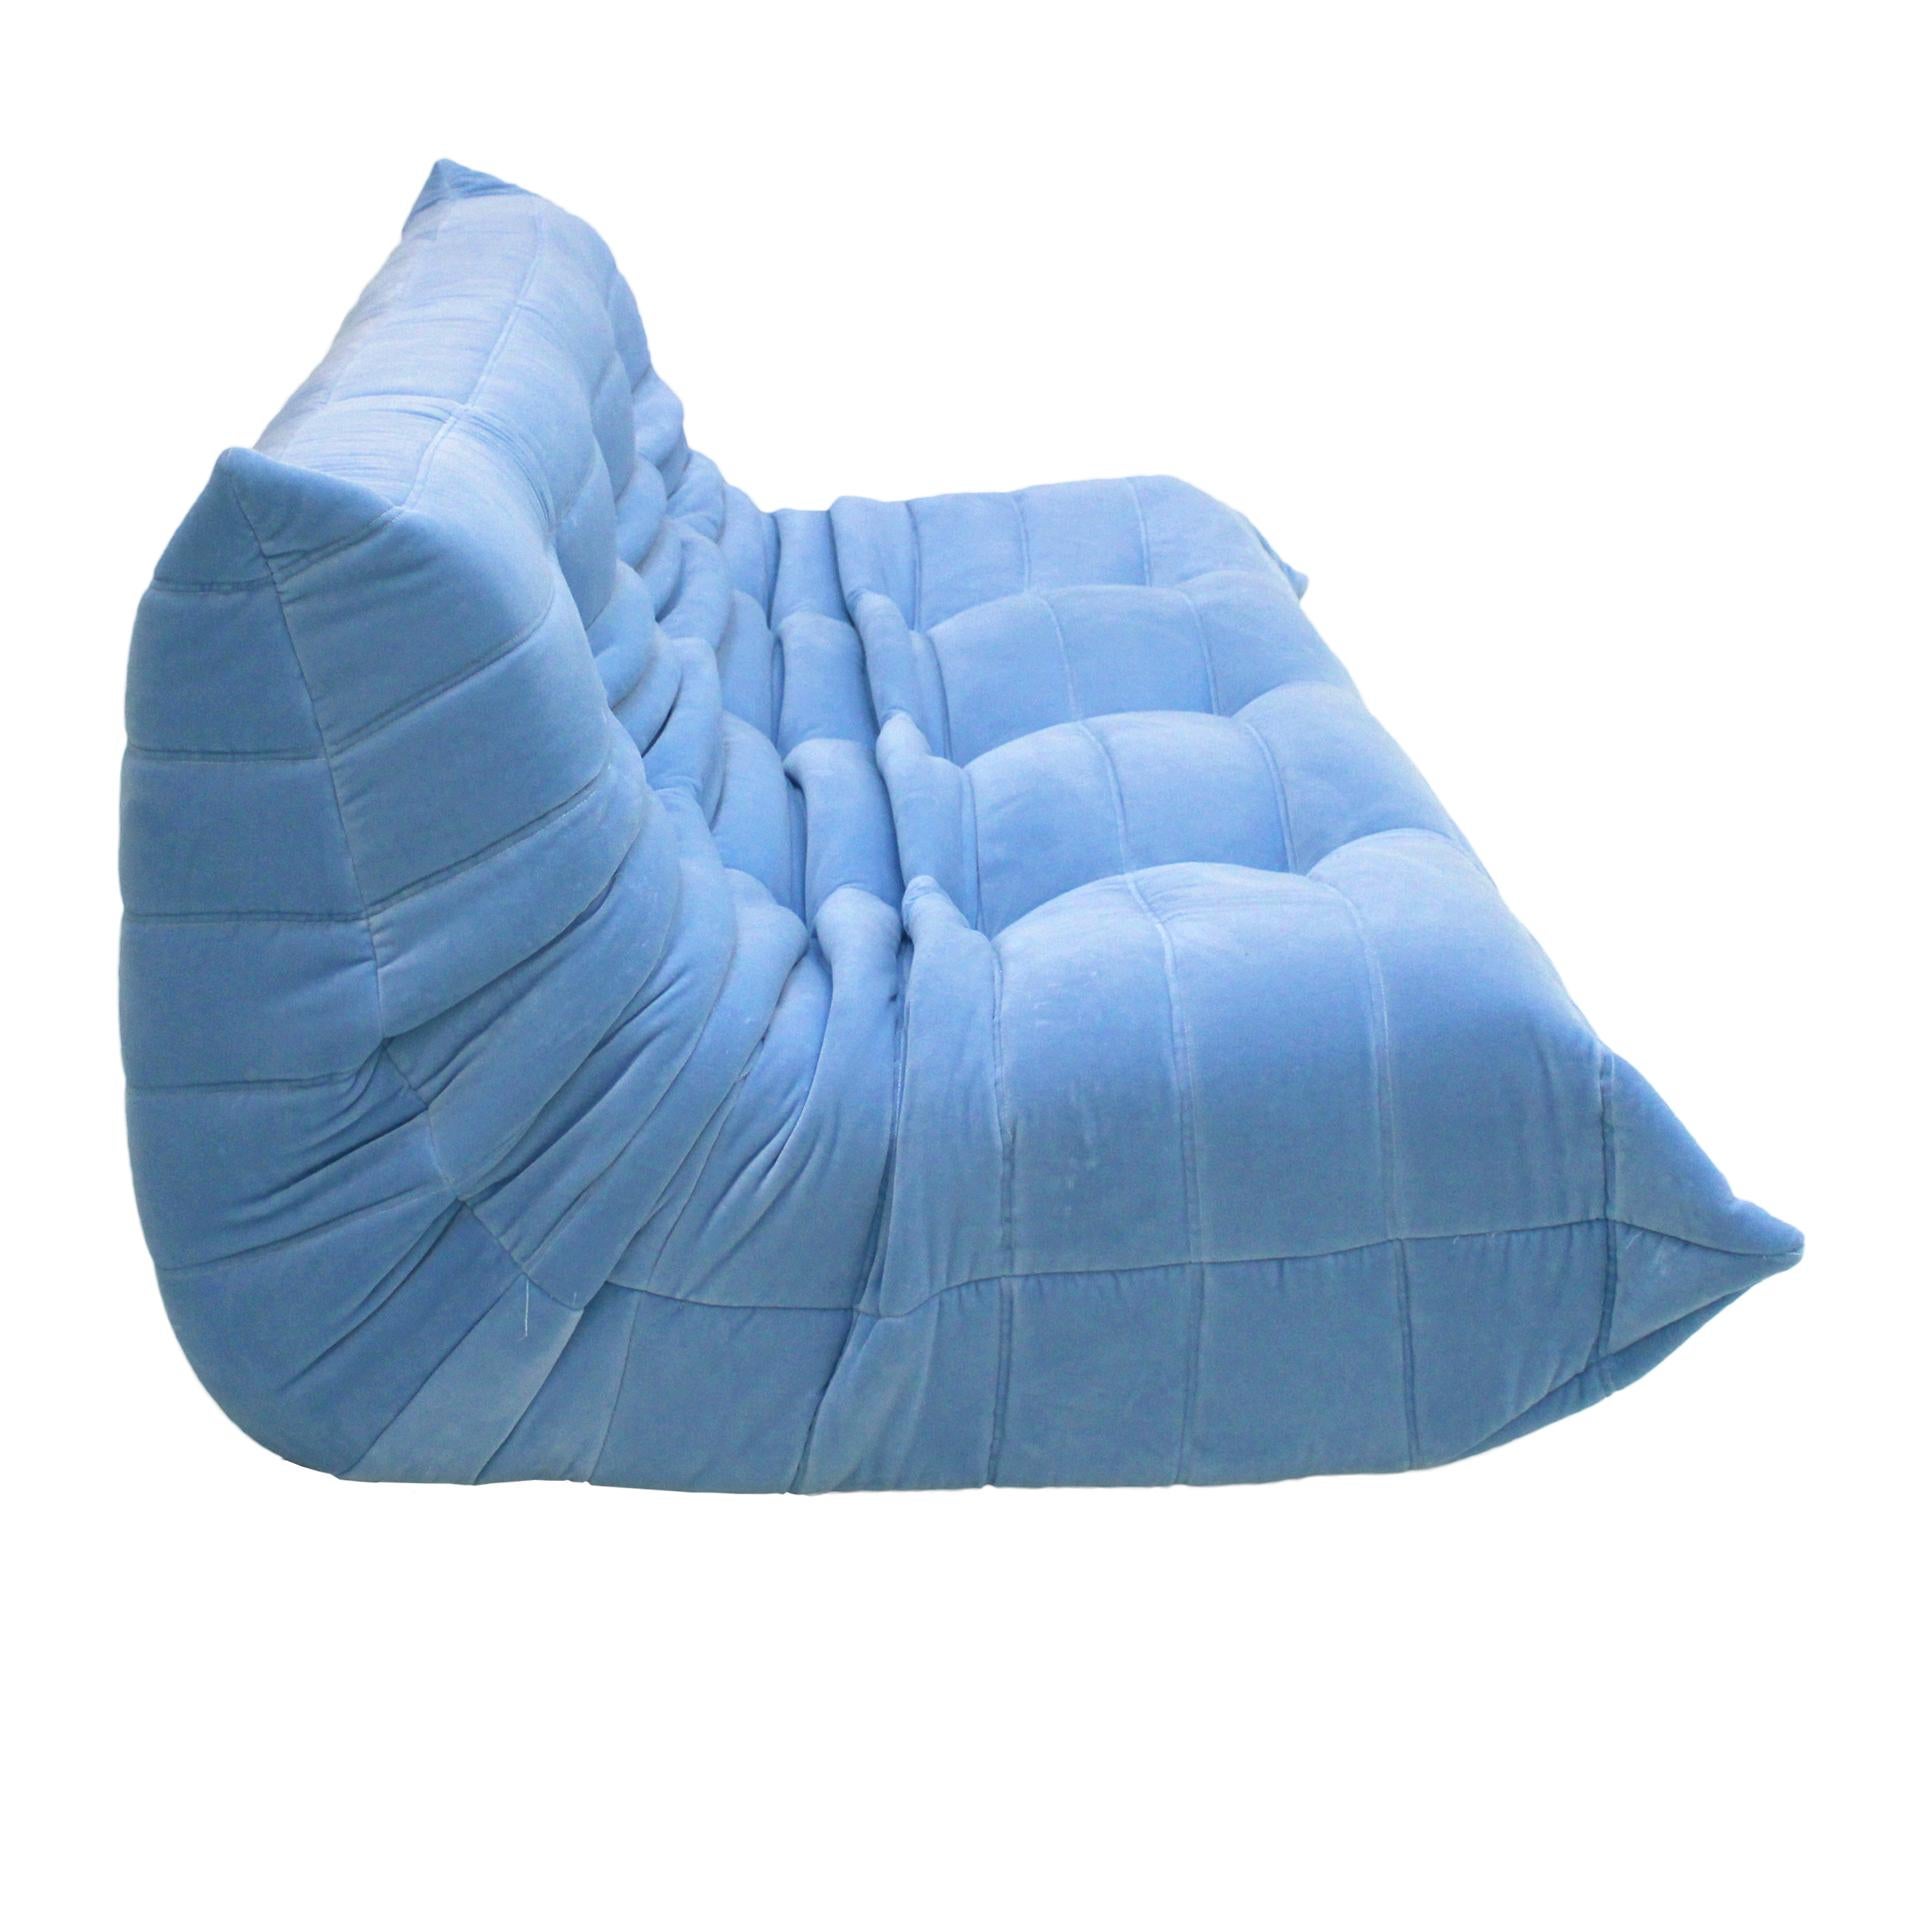 Original Ligne Roset Togo Blue Cotton Velvet Sofa Designed by Michel Ducaroy 1